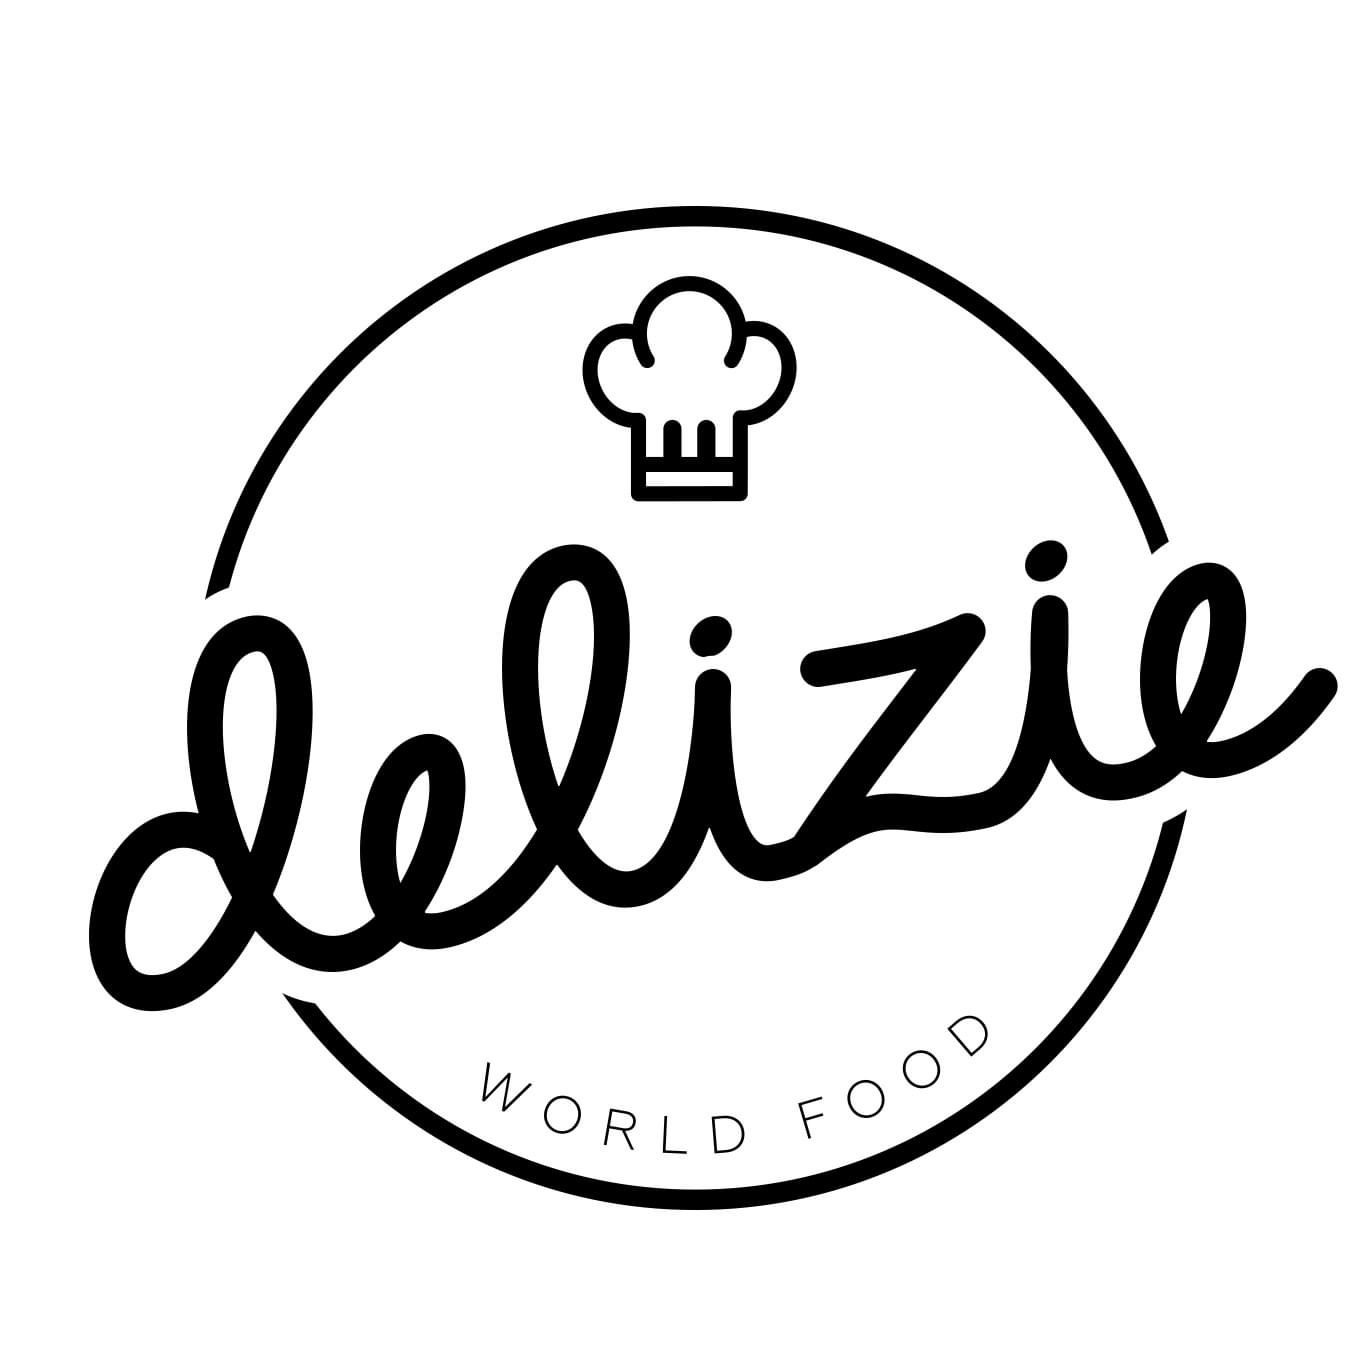 Delizie World Food